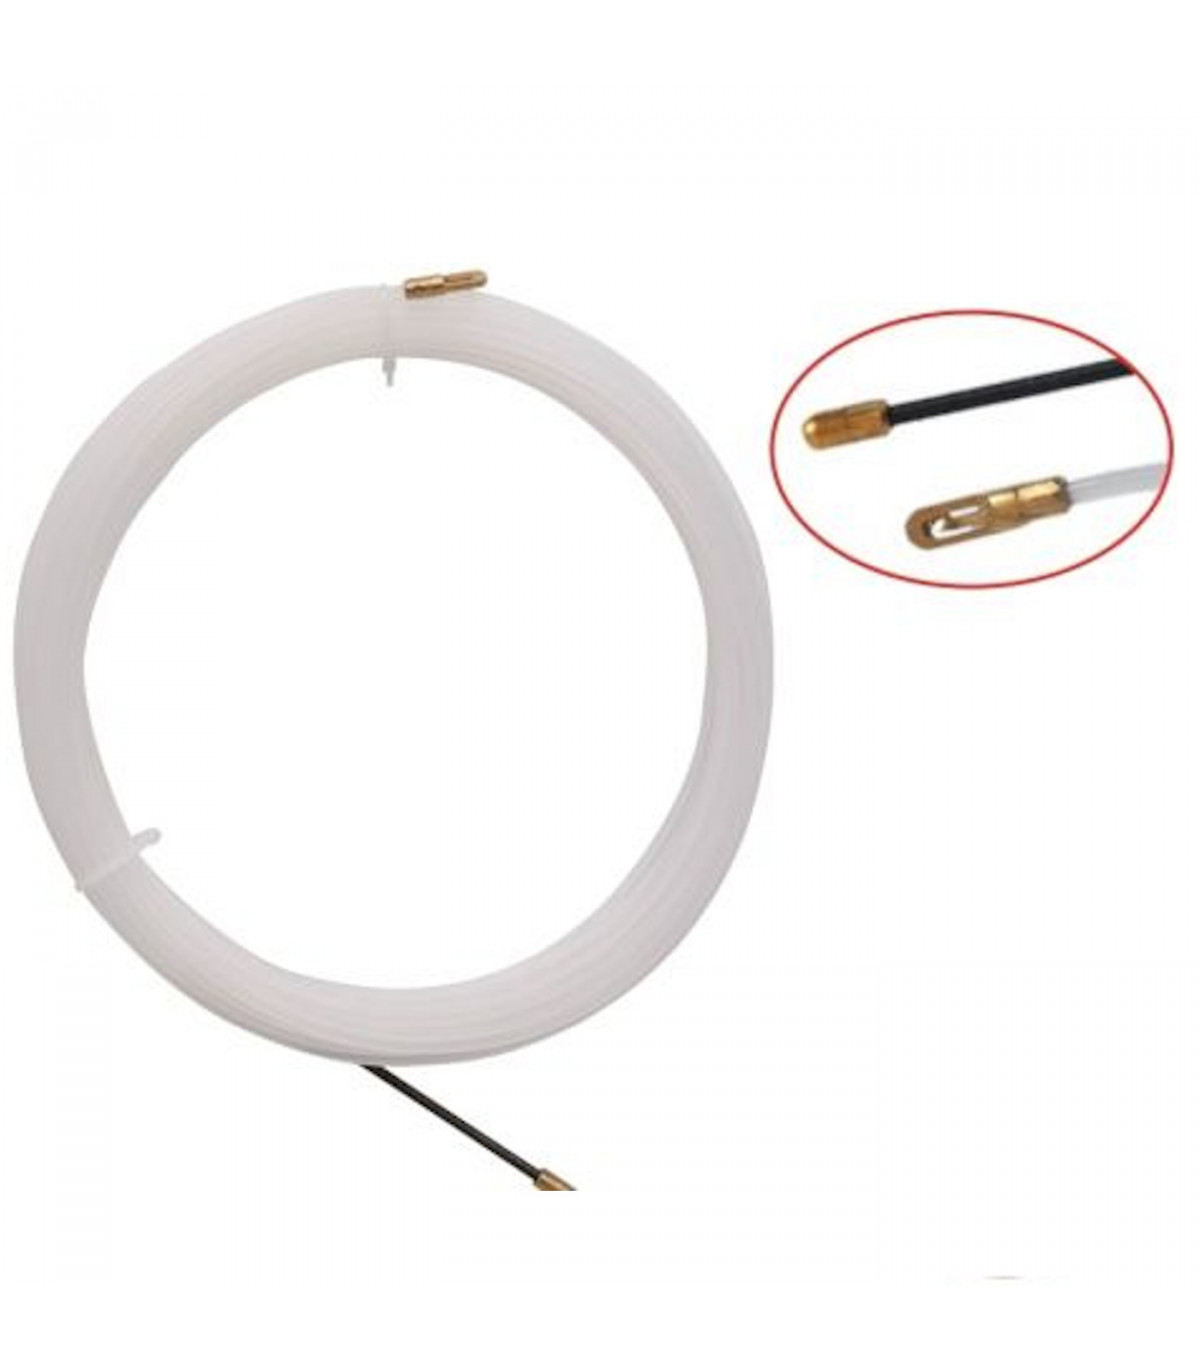 Guía para pasar cables de 0.3 x 100 cm de plástico. Sonda pasahilos.  Plástico para incorporar cables fácilmente. Conductor para